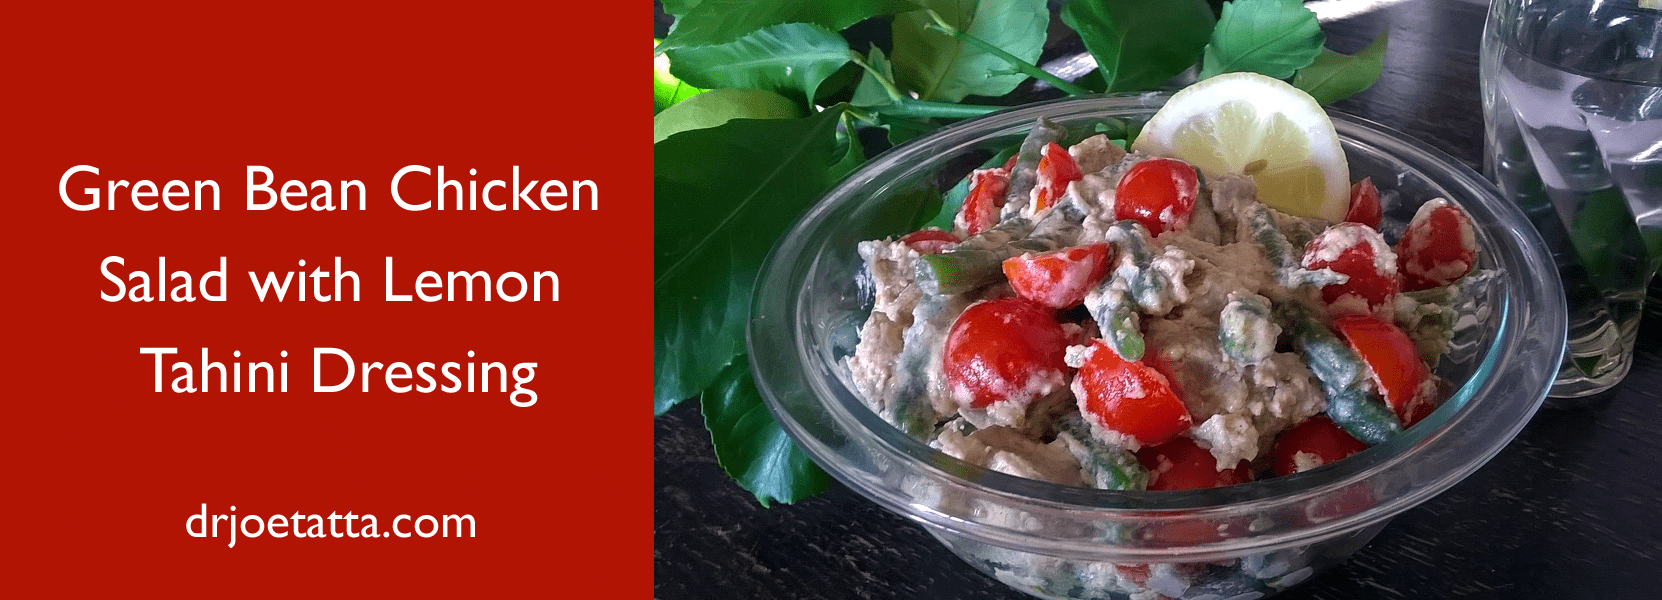 Green Bean Chicken Salad with Lemon Tahini Dressing